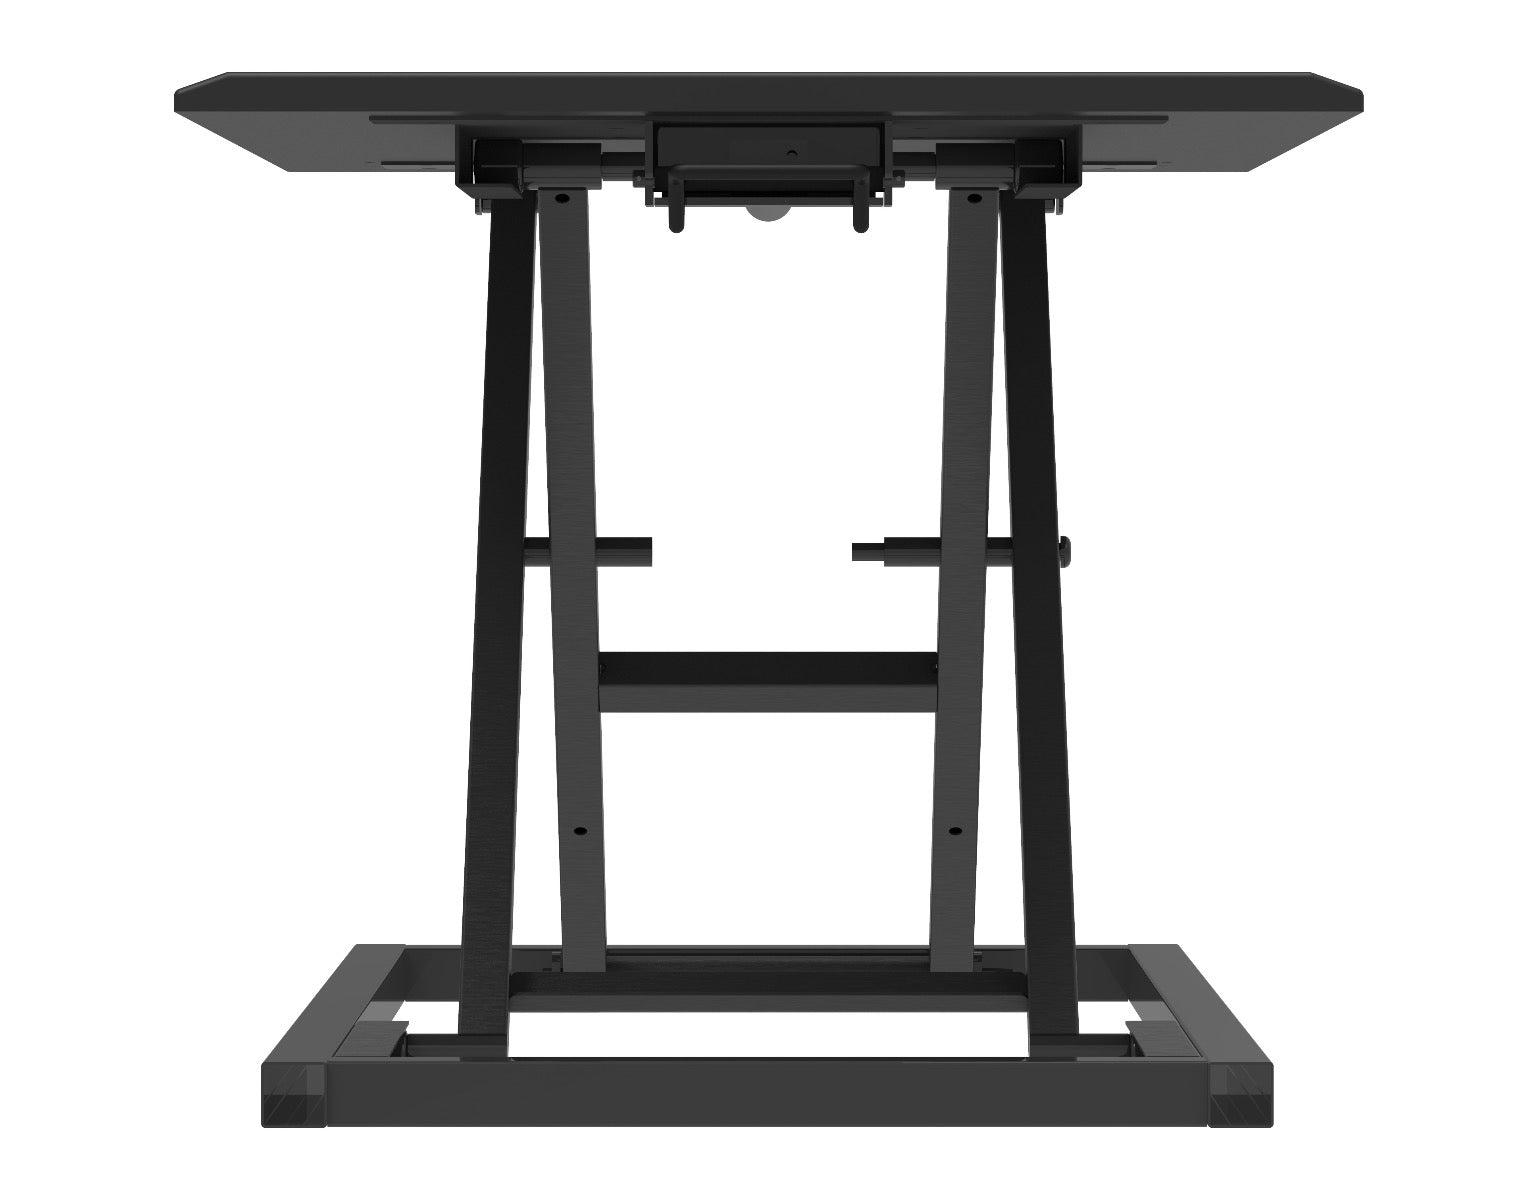 Luxor CVTR32-BK Pneumatic Standing Desk Converter - Black (LUX-CVTR32-BK) - SchoolOutlet